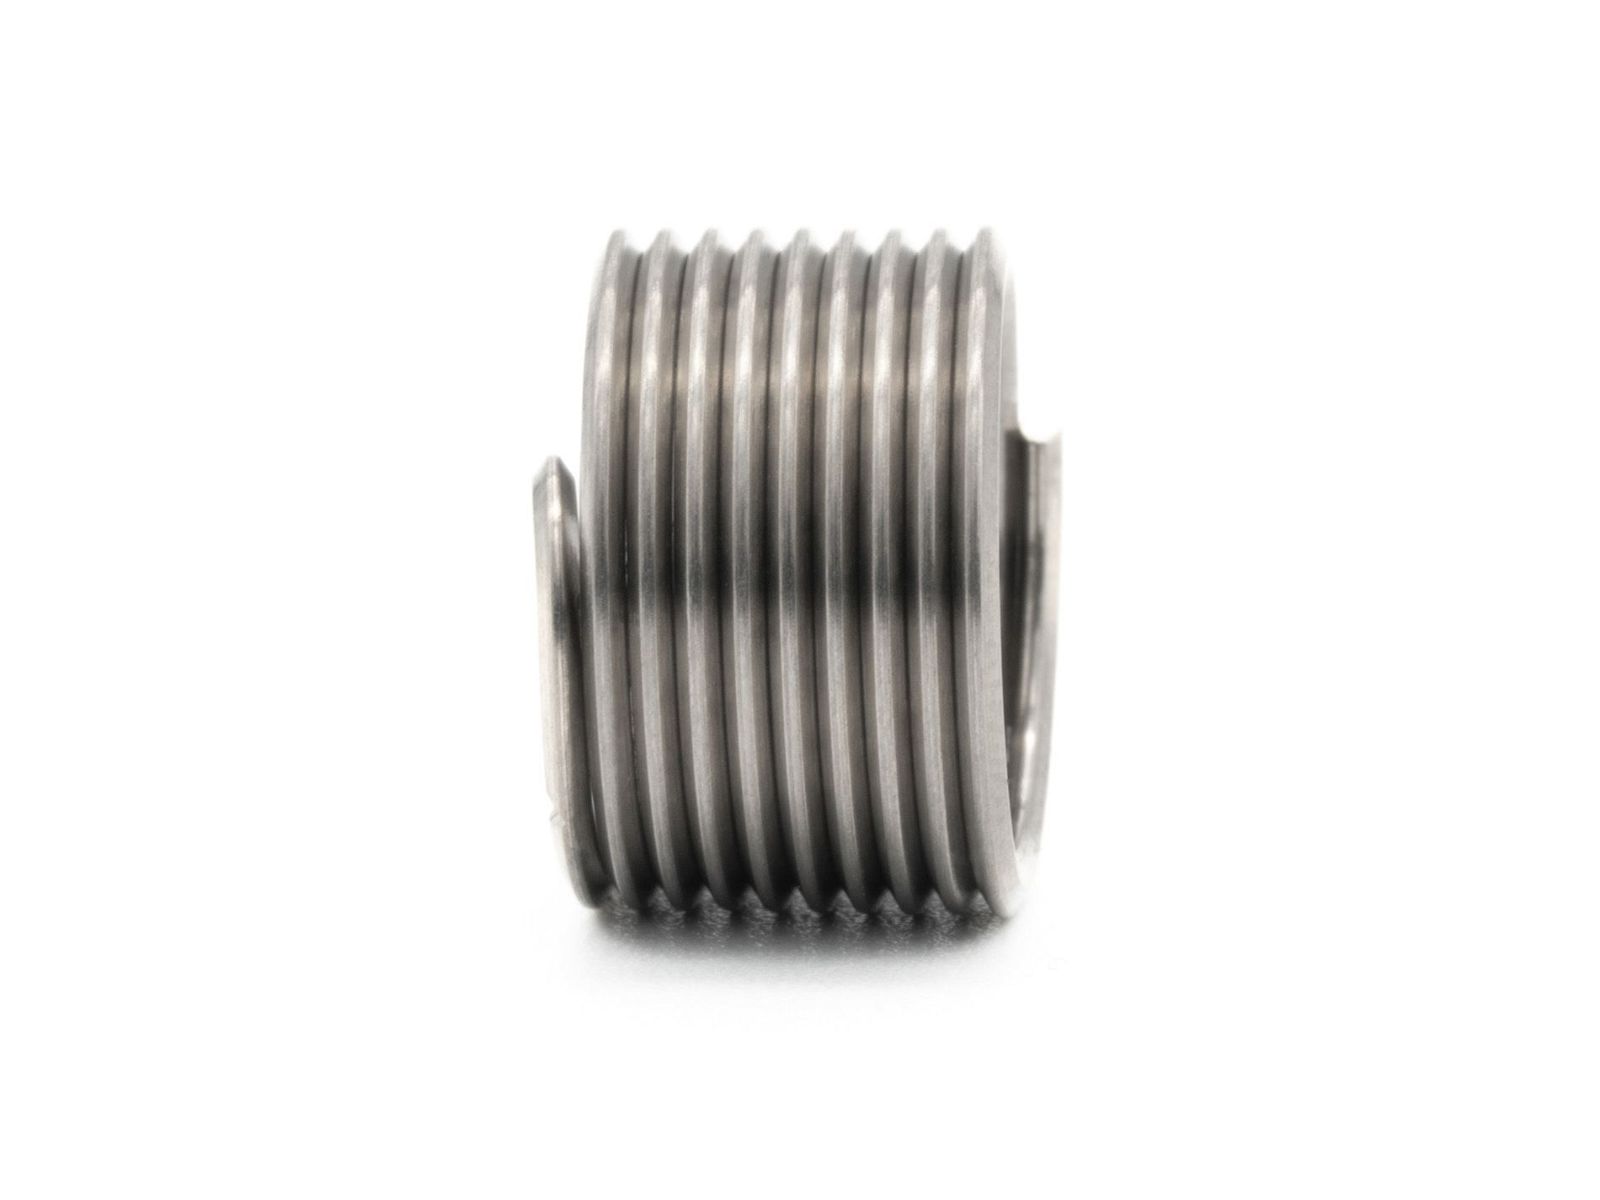 BaerCoil Wire Thread Inserts G (BSP) 5/8 x 14 - 2.5 D (39.69 mm) - free running - 10 pcs.